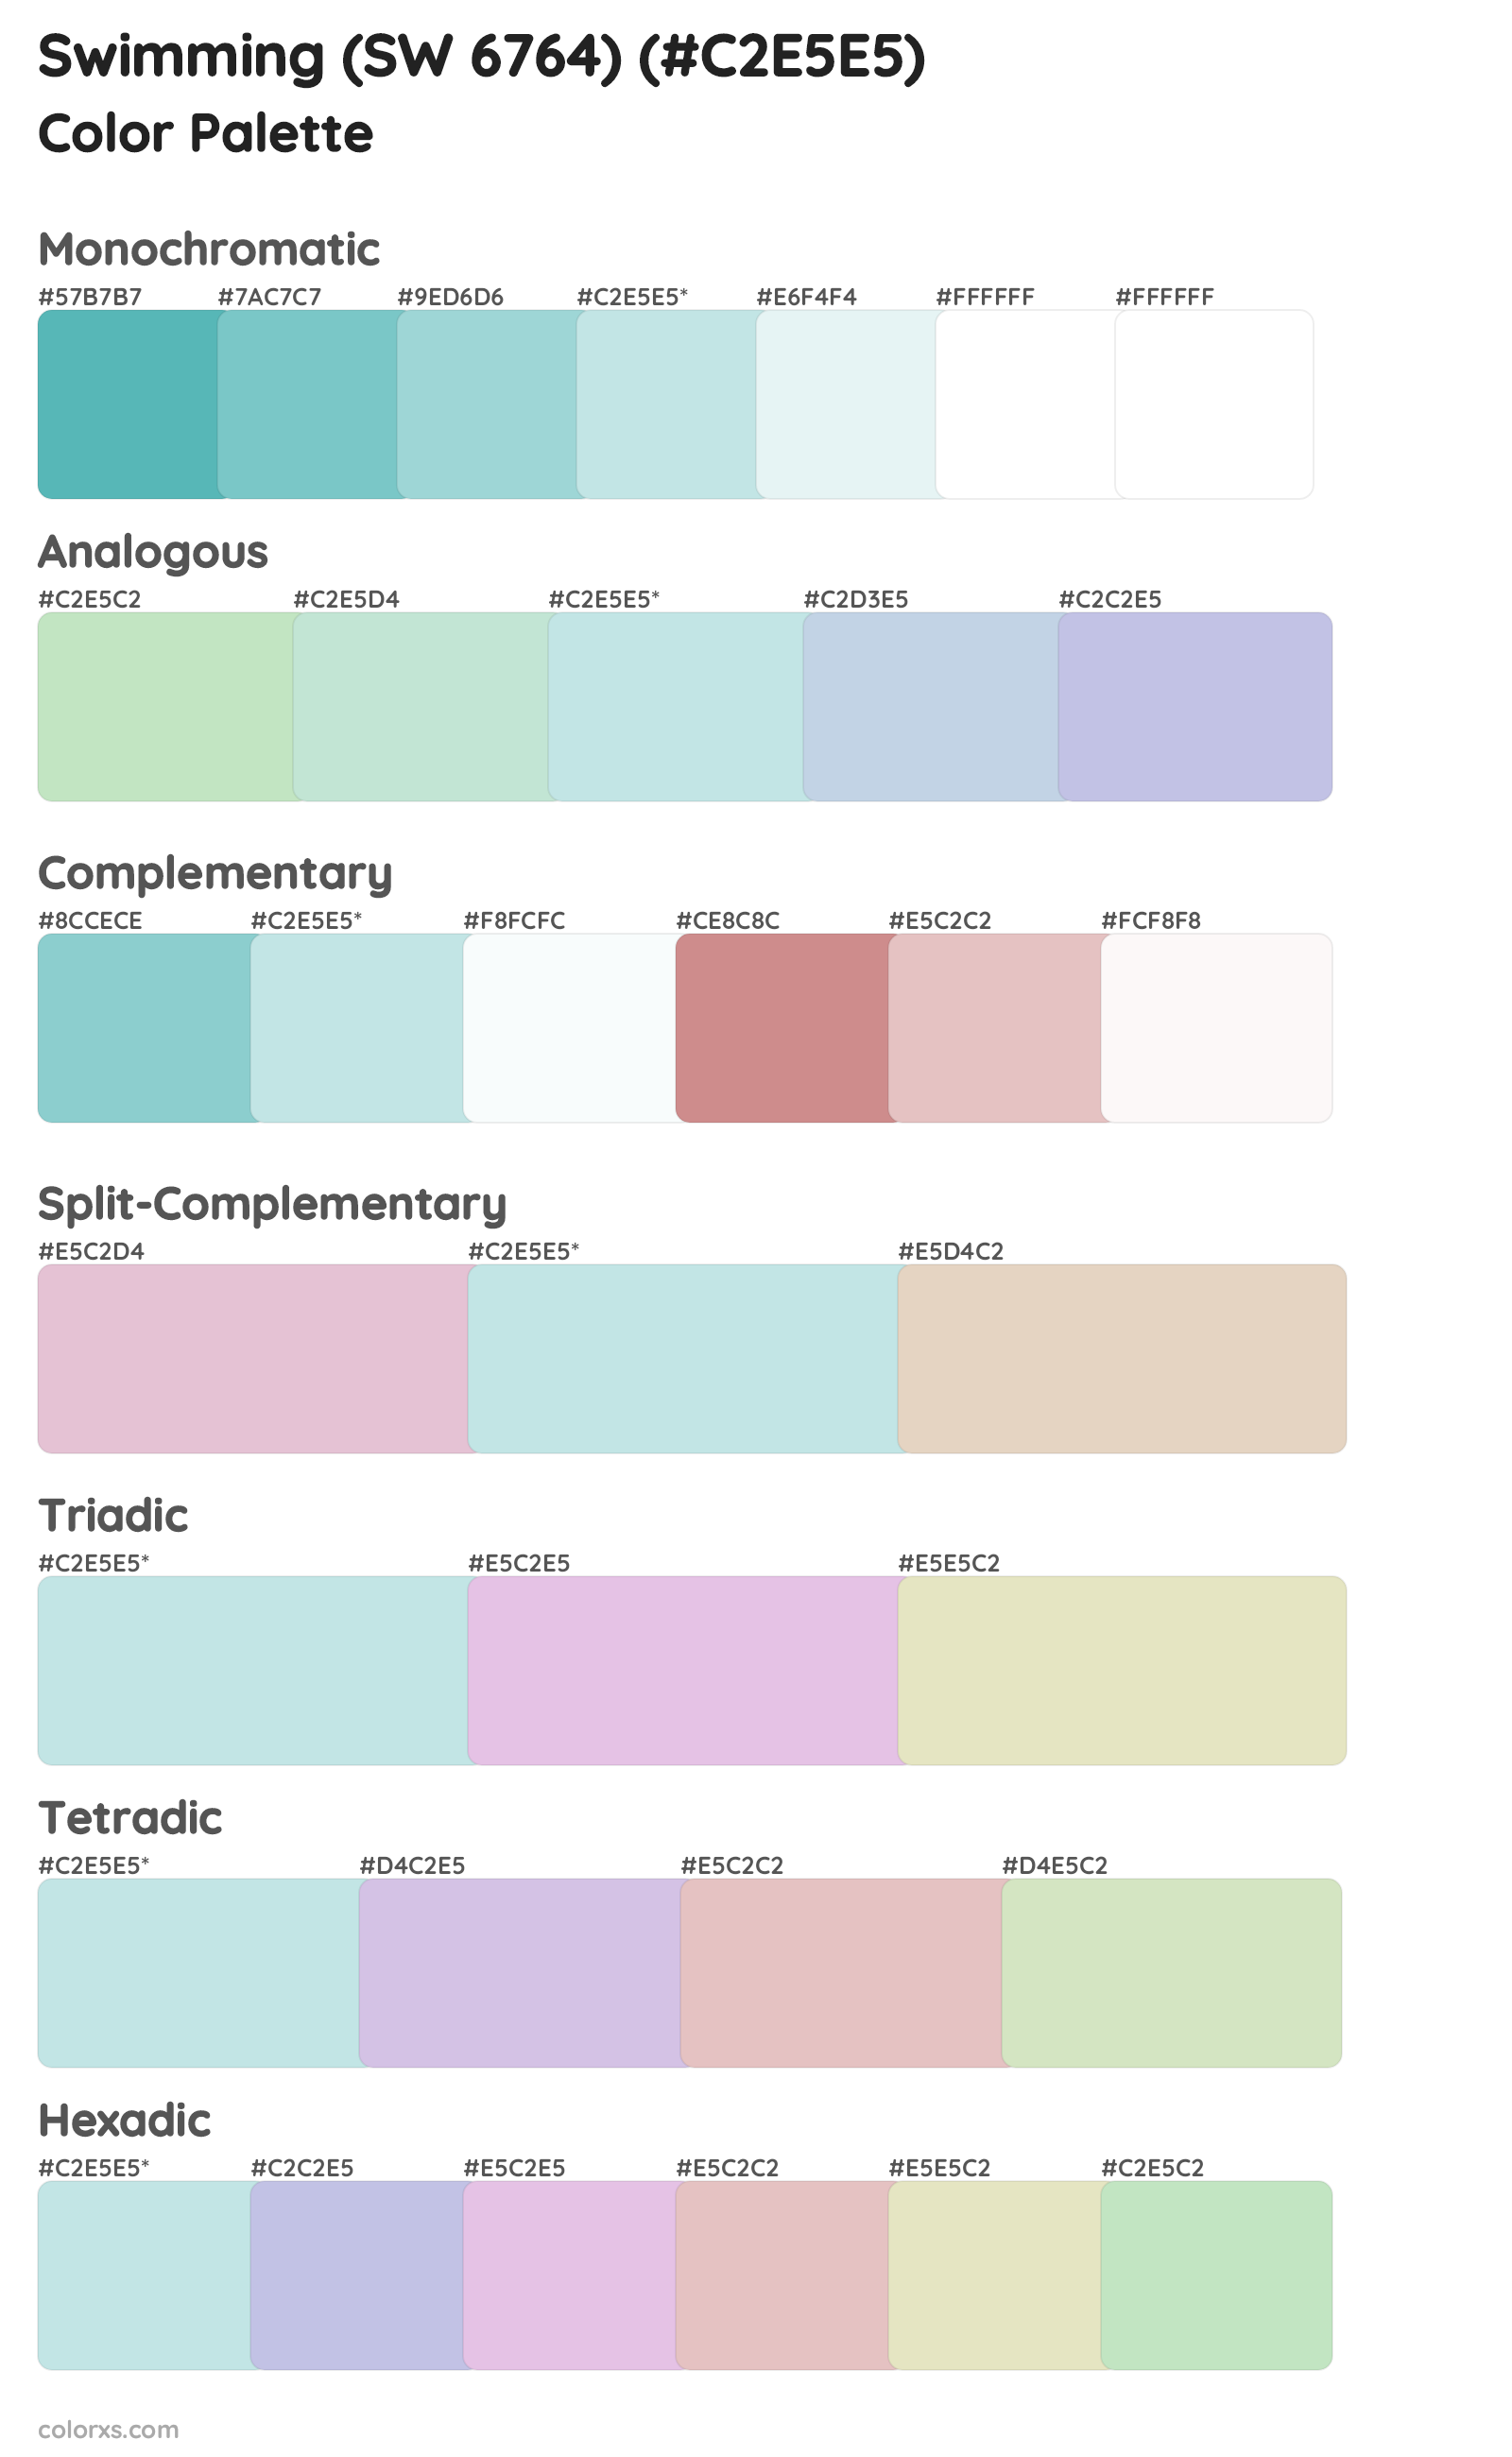 Swimming (SW 6764) Color Scheme Palettes